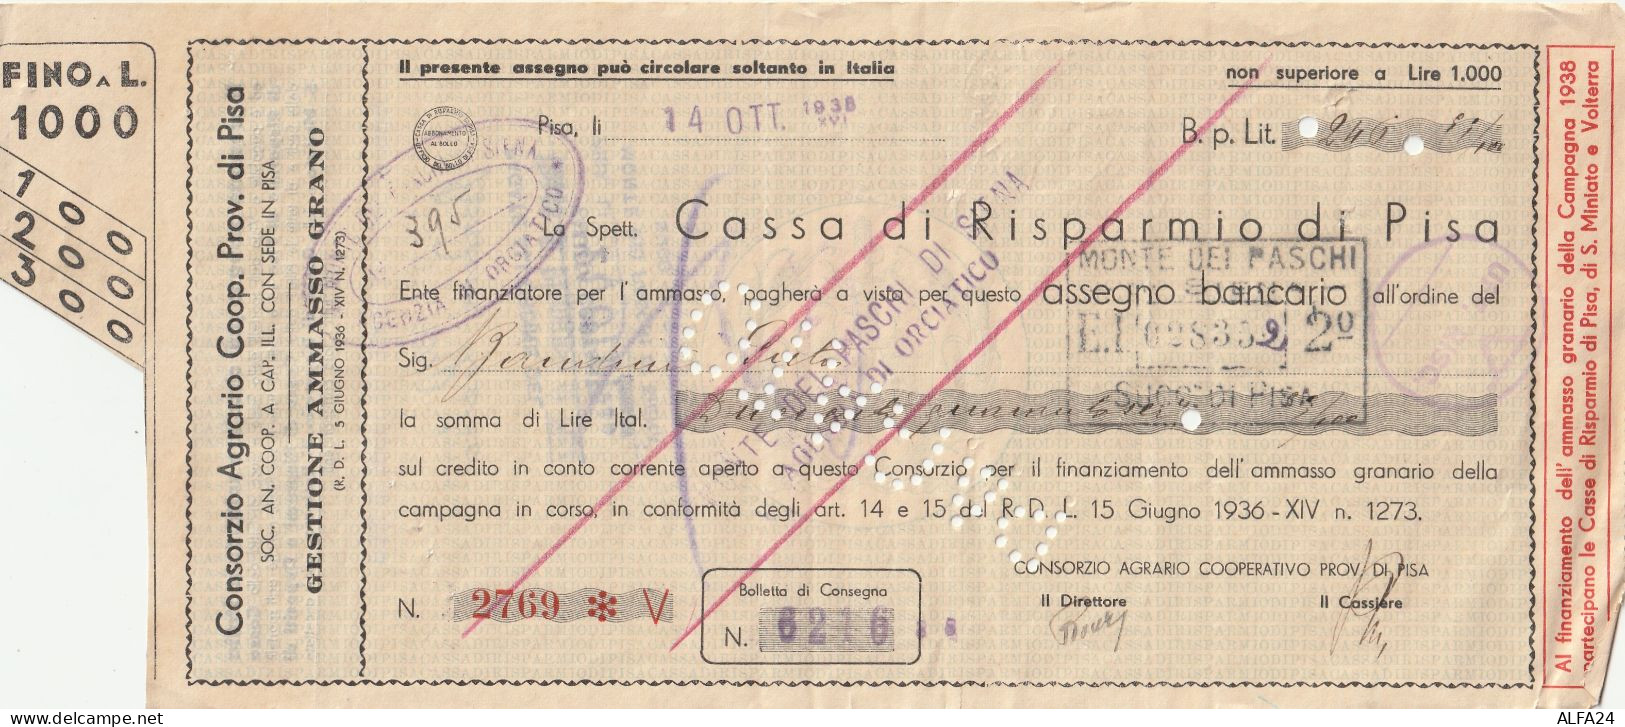 ASSEGNO 1938 CASSA RISPARMIO PISA Spiegazzato (ZP3599 - [10] Checks And Mini-checks